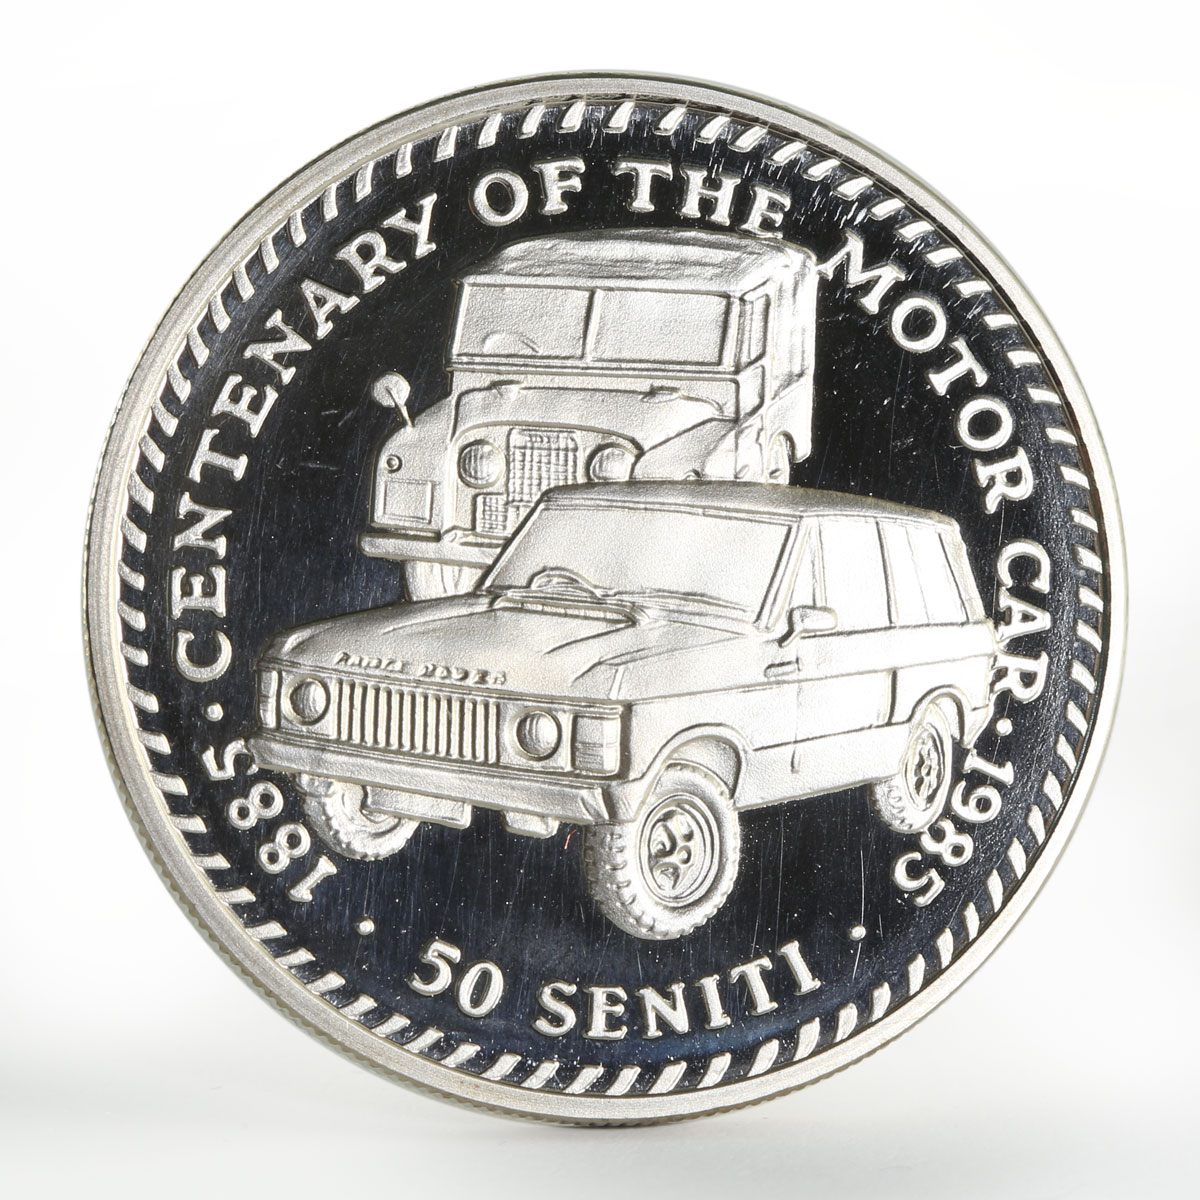 Tonga 50 seniti Rover cars proof copper-nickel coin 1985